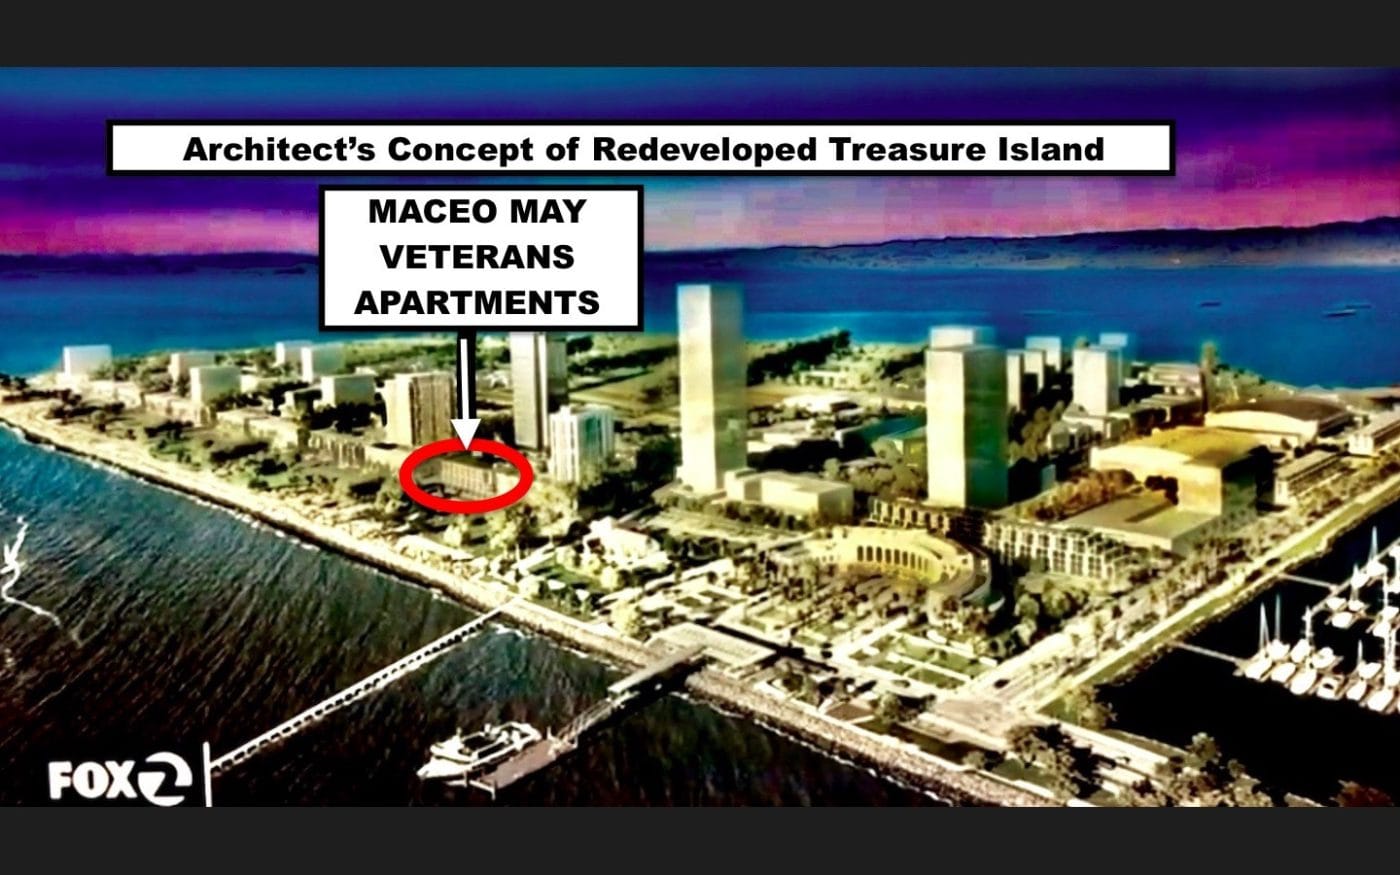 Architectas-redevelopment-illustration-with-Maceo-May-1400x875, Does Treasure Island’s Equity Vision fix problems in Maceo May’s Veterans’ Housing? , World News & Views 